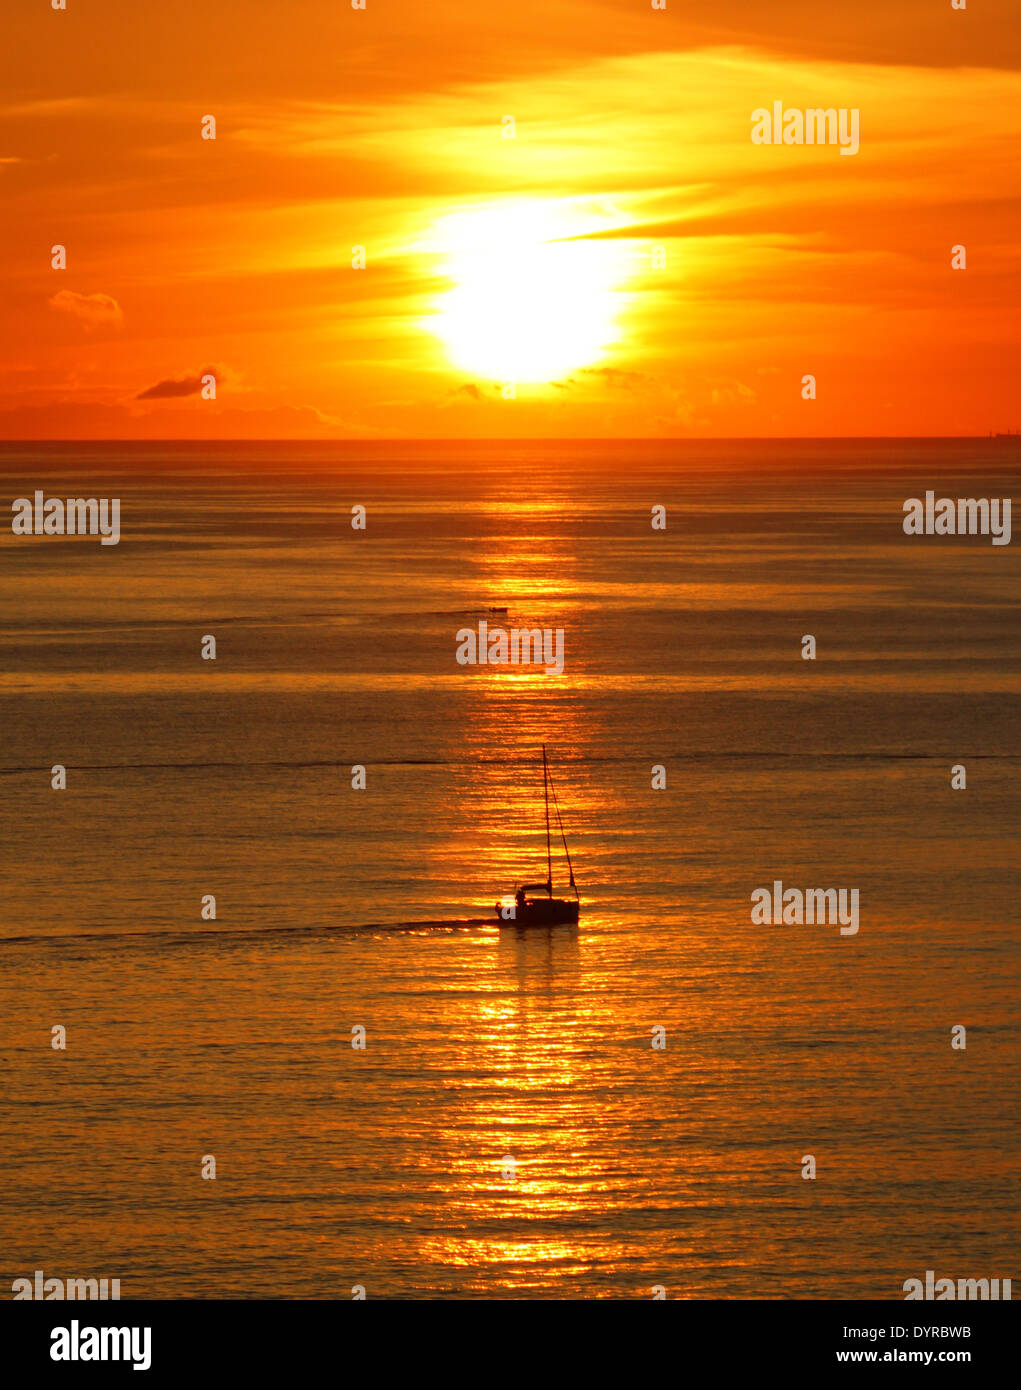 Sunrise at sea in Las Palmas de Gran Canaria, Spain, with a sail boat  silhouette in sunlight streak in the water Stock Photo - Alamy